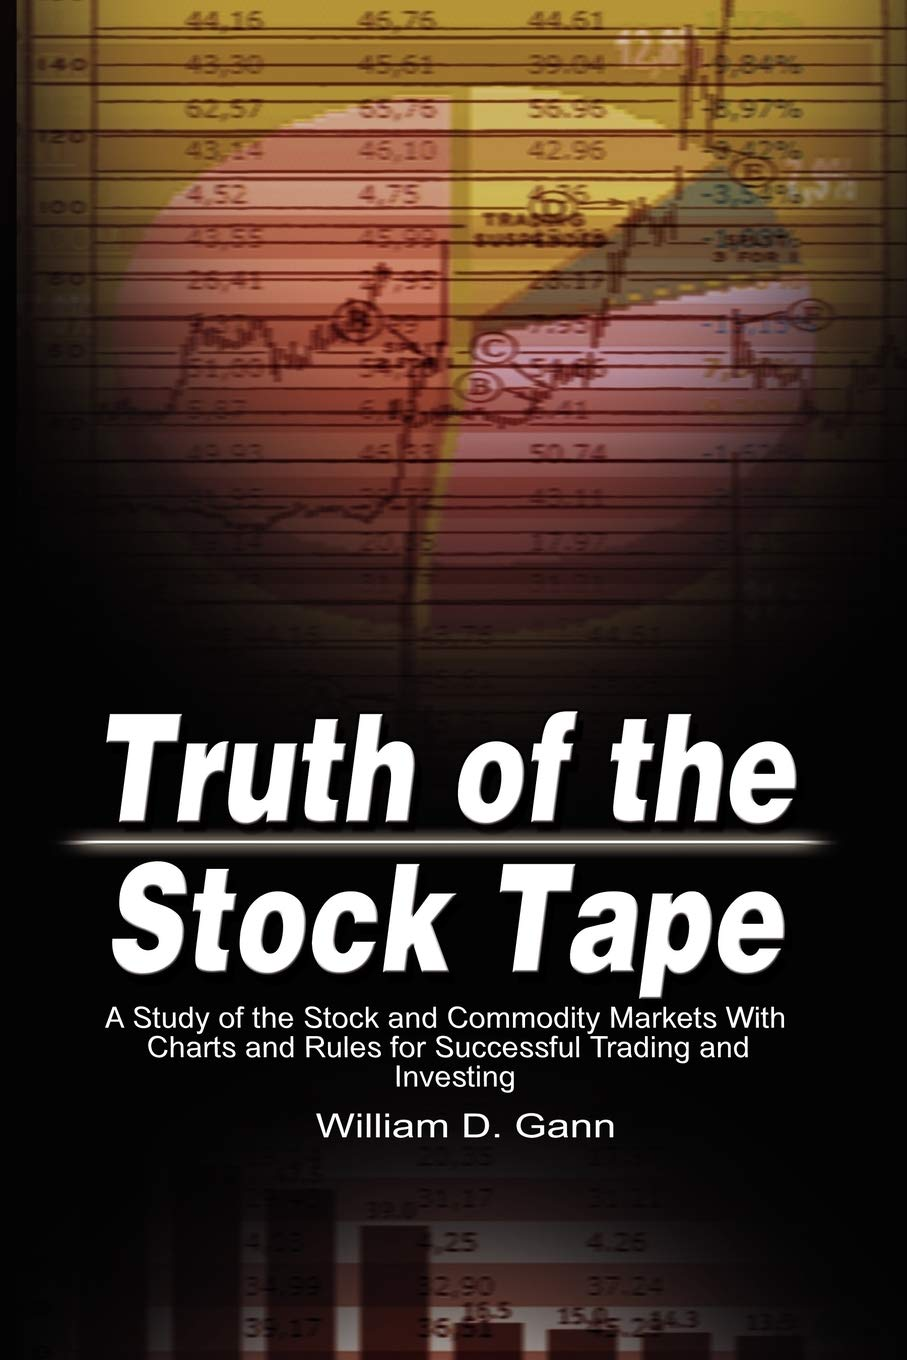 Buchcover zu "Truth of the Stock Tape"